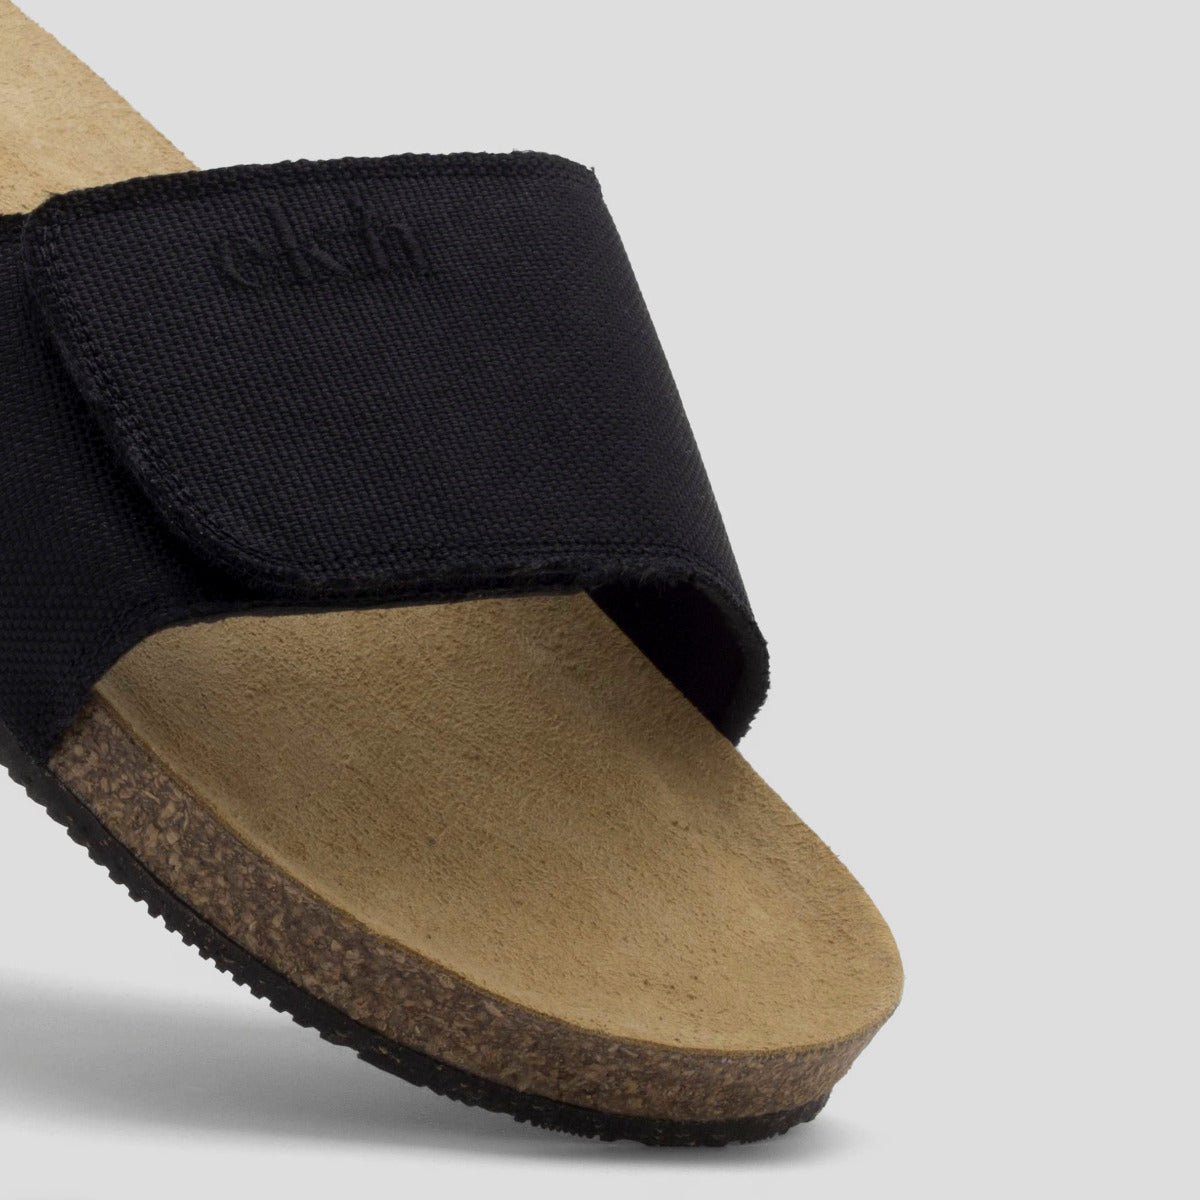 Coconut Slide Sandal In Black - Sizes 36-43